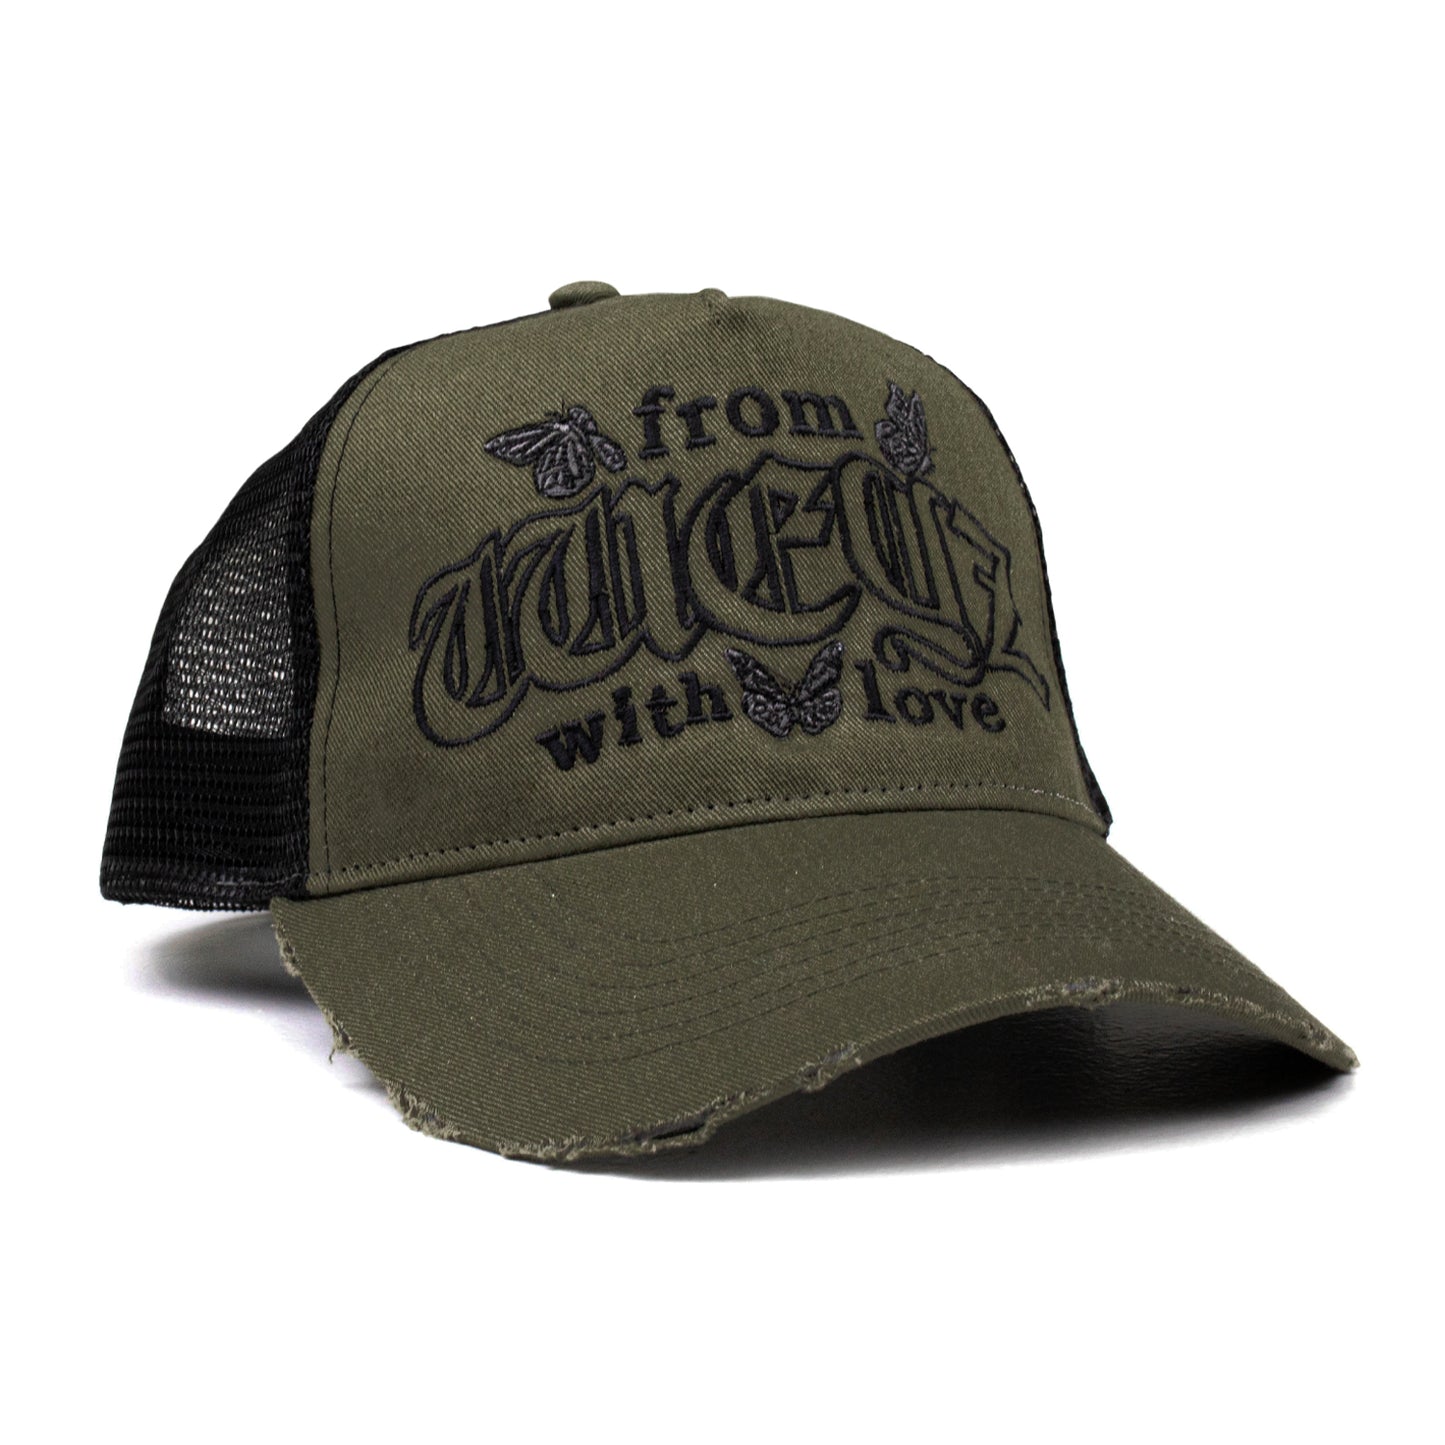 Trucker caps "From Weyz with Love" - Black/Khaki Green